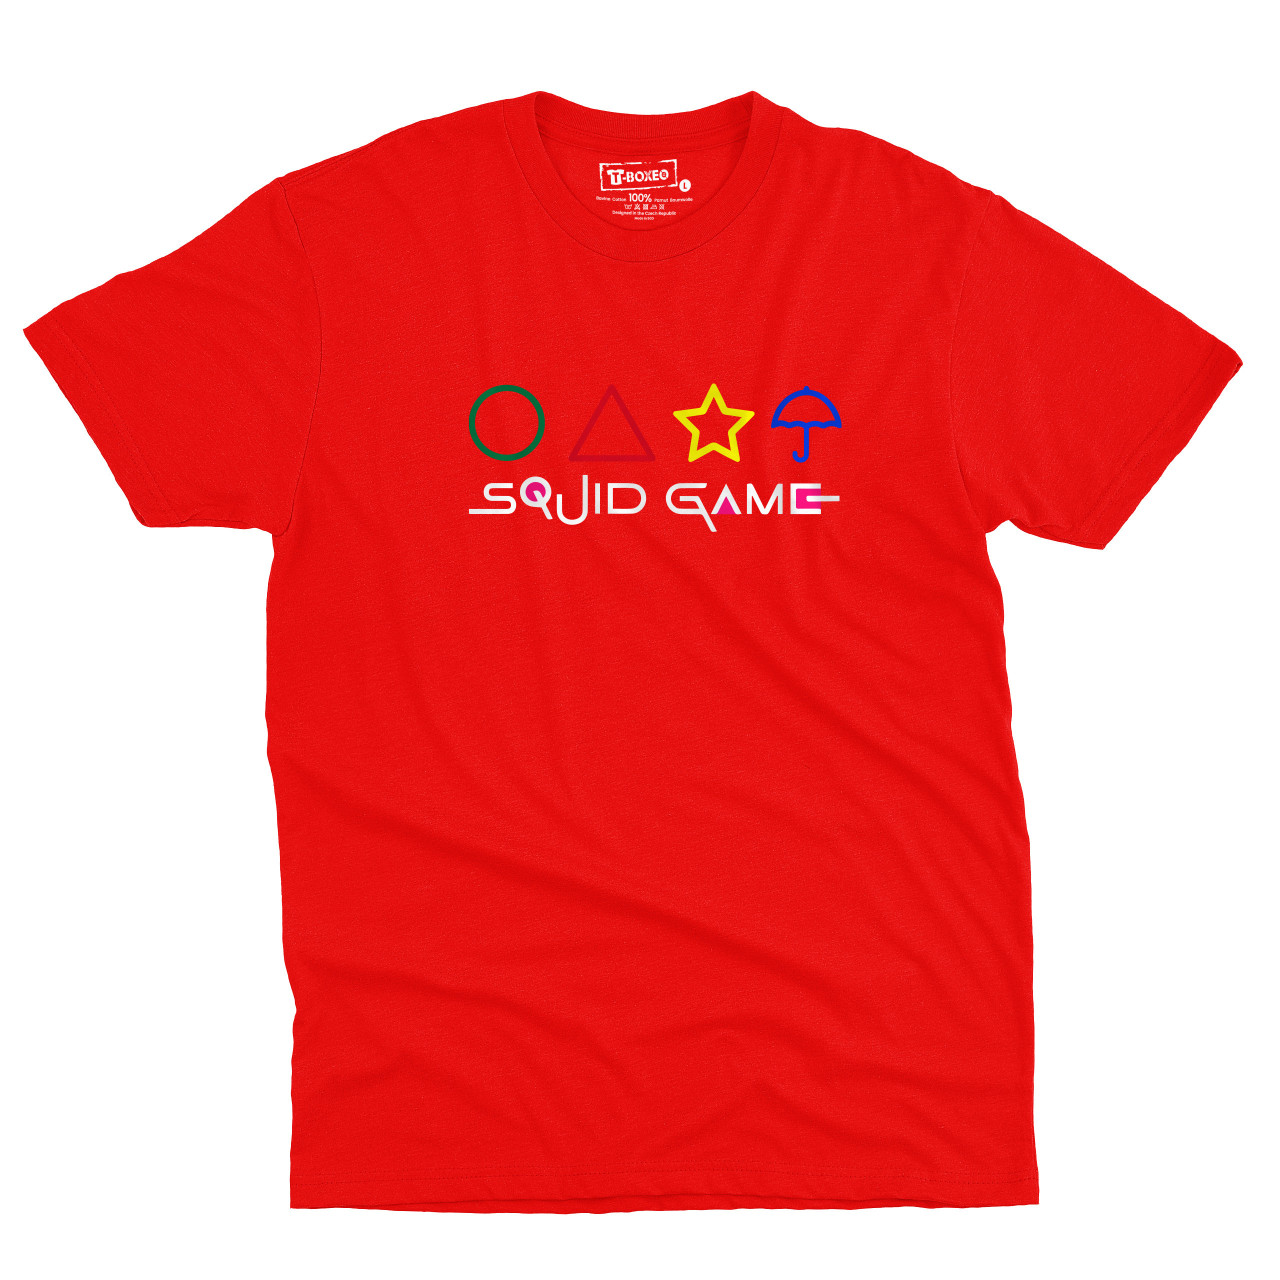 Pánské tričko s potiskem “Squid Game, název a barevné symboly"